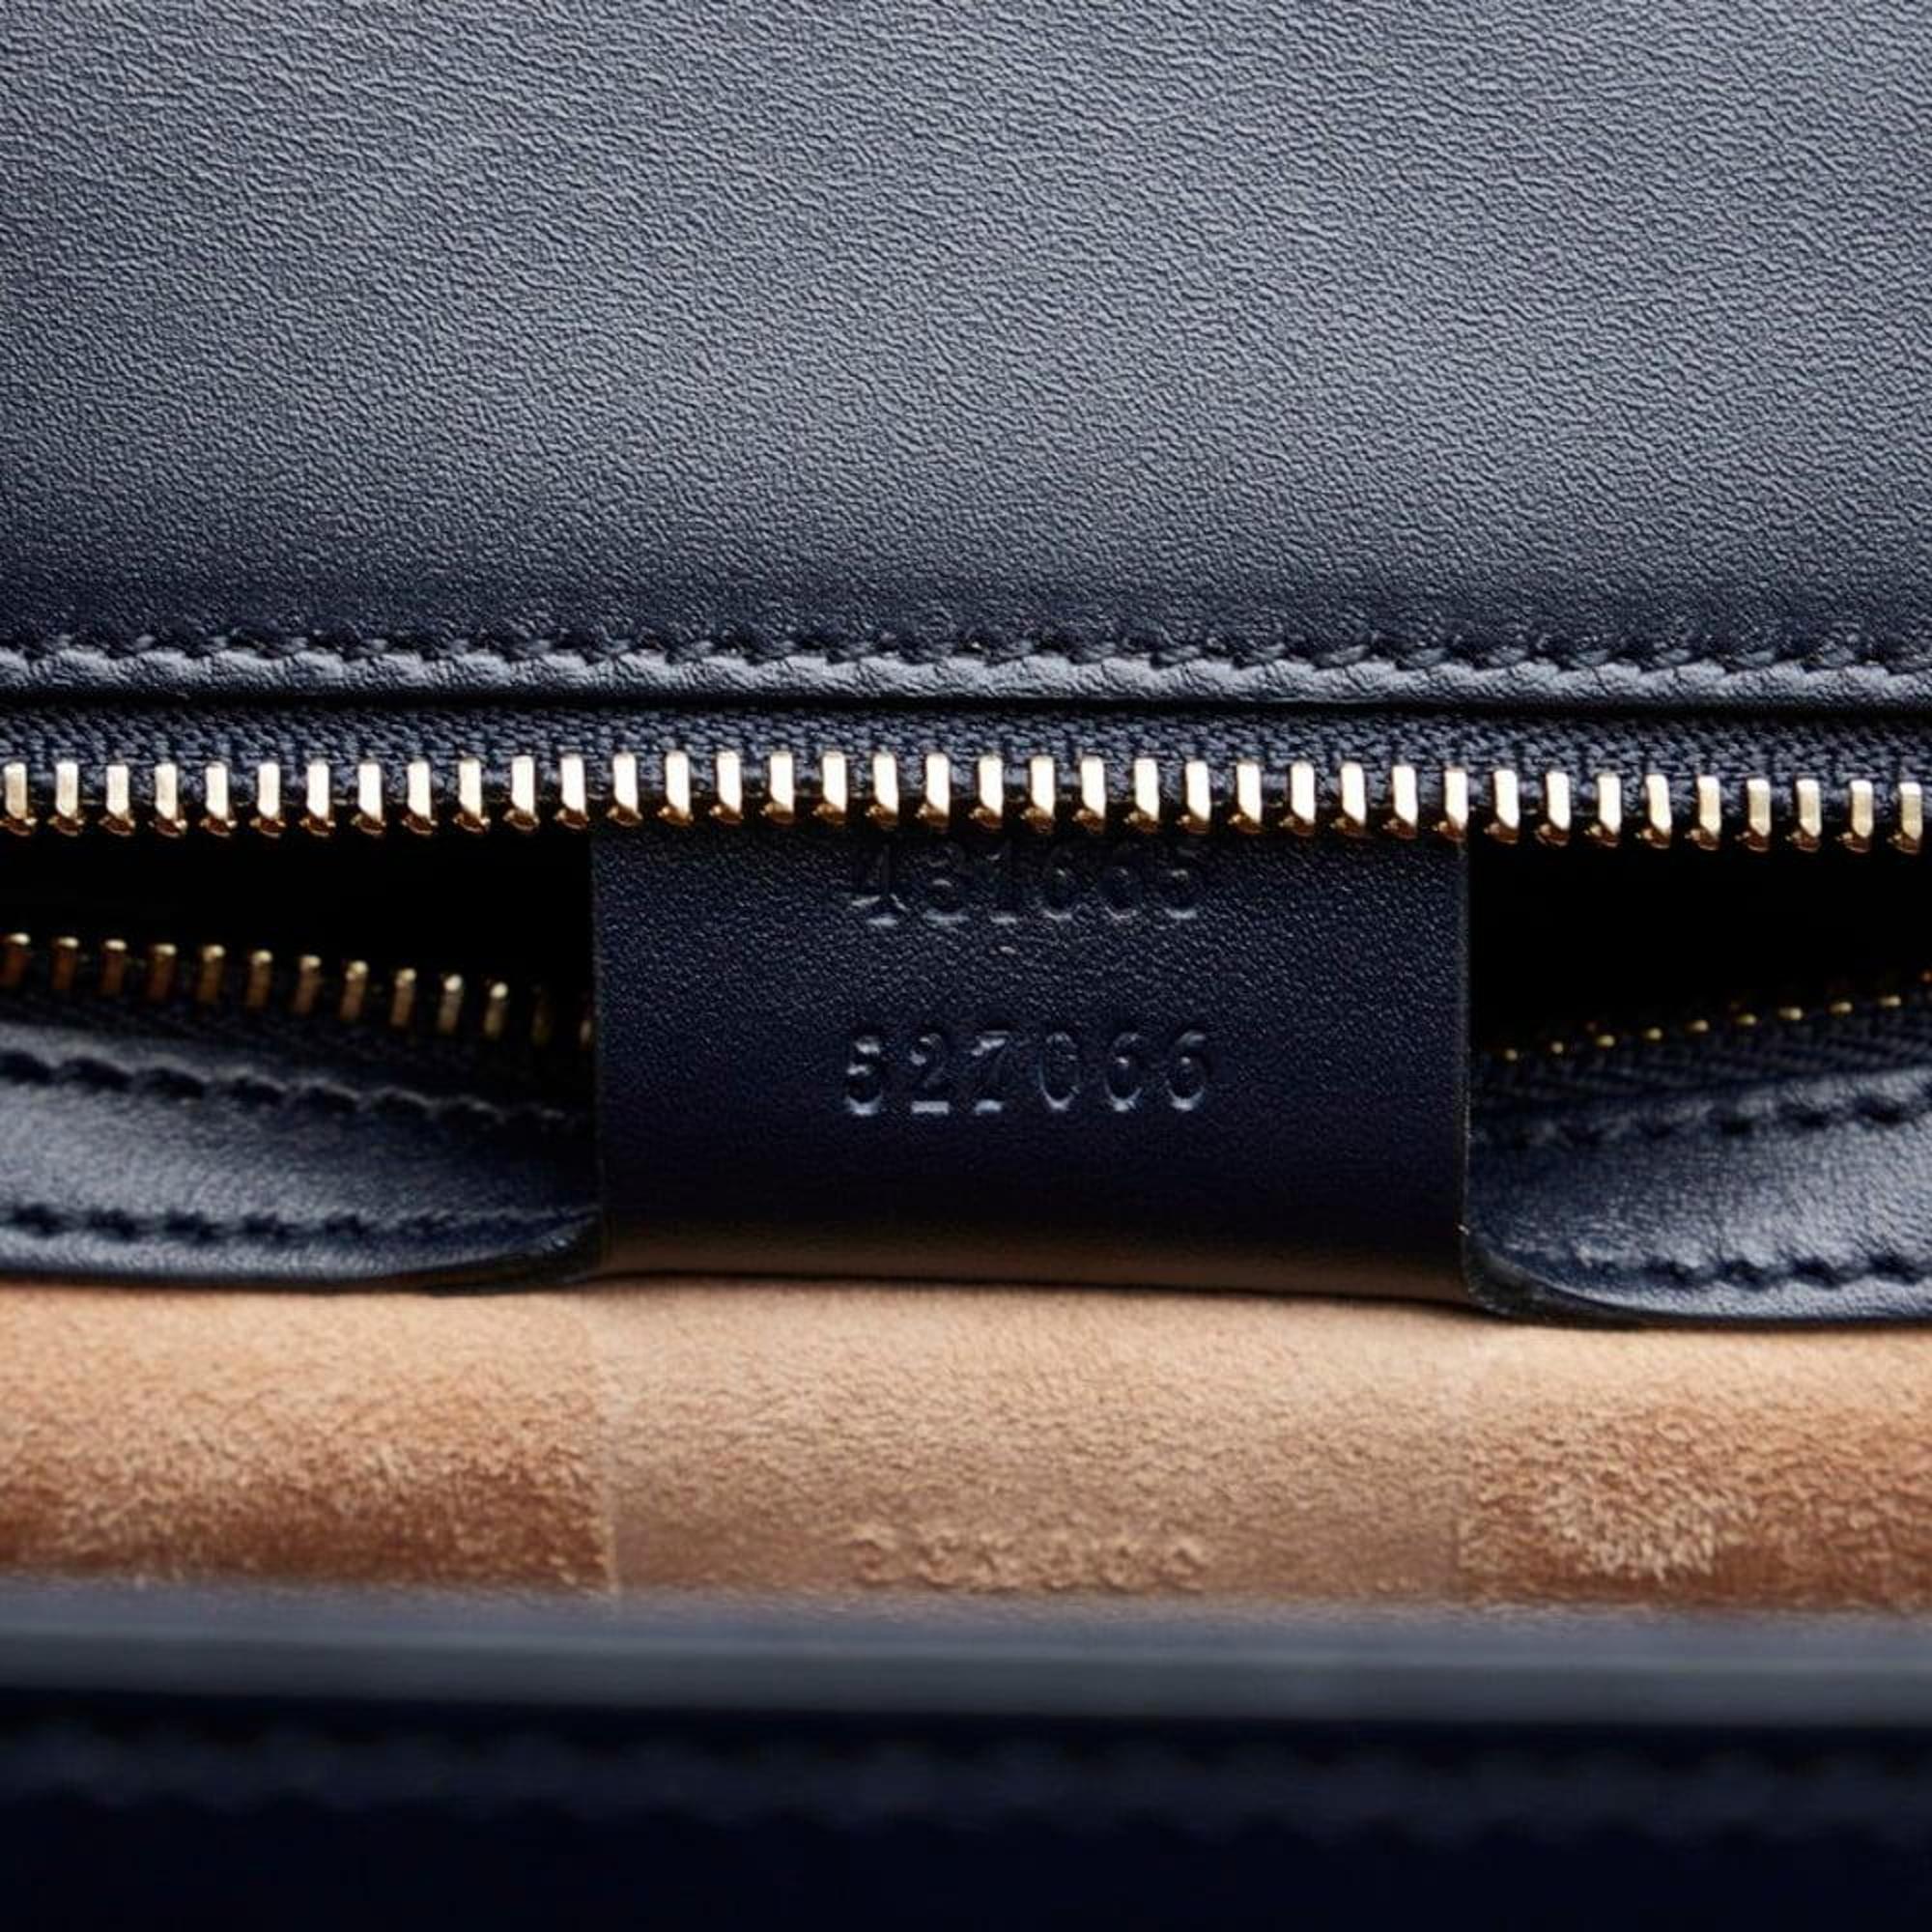 Gucci Black Leather Medium Sylvie Top Handle Bag